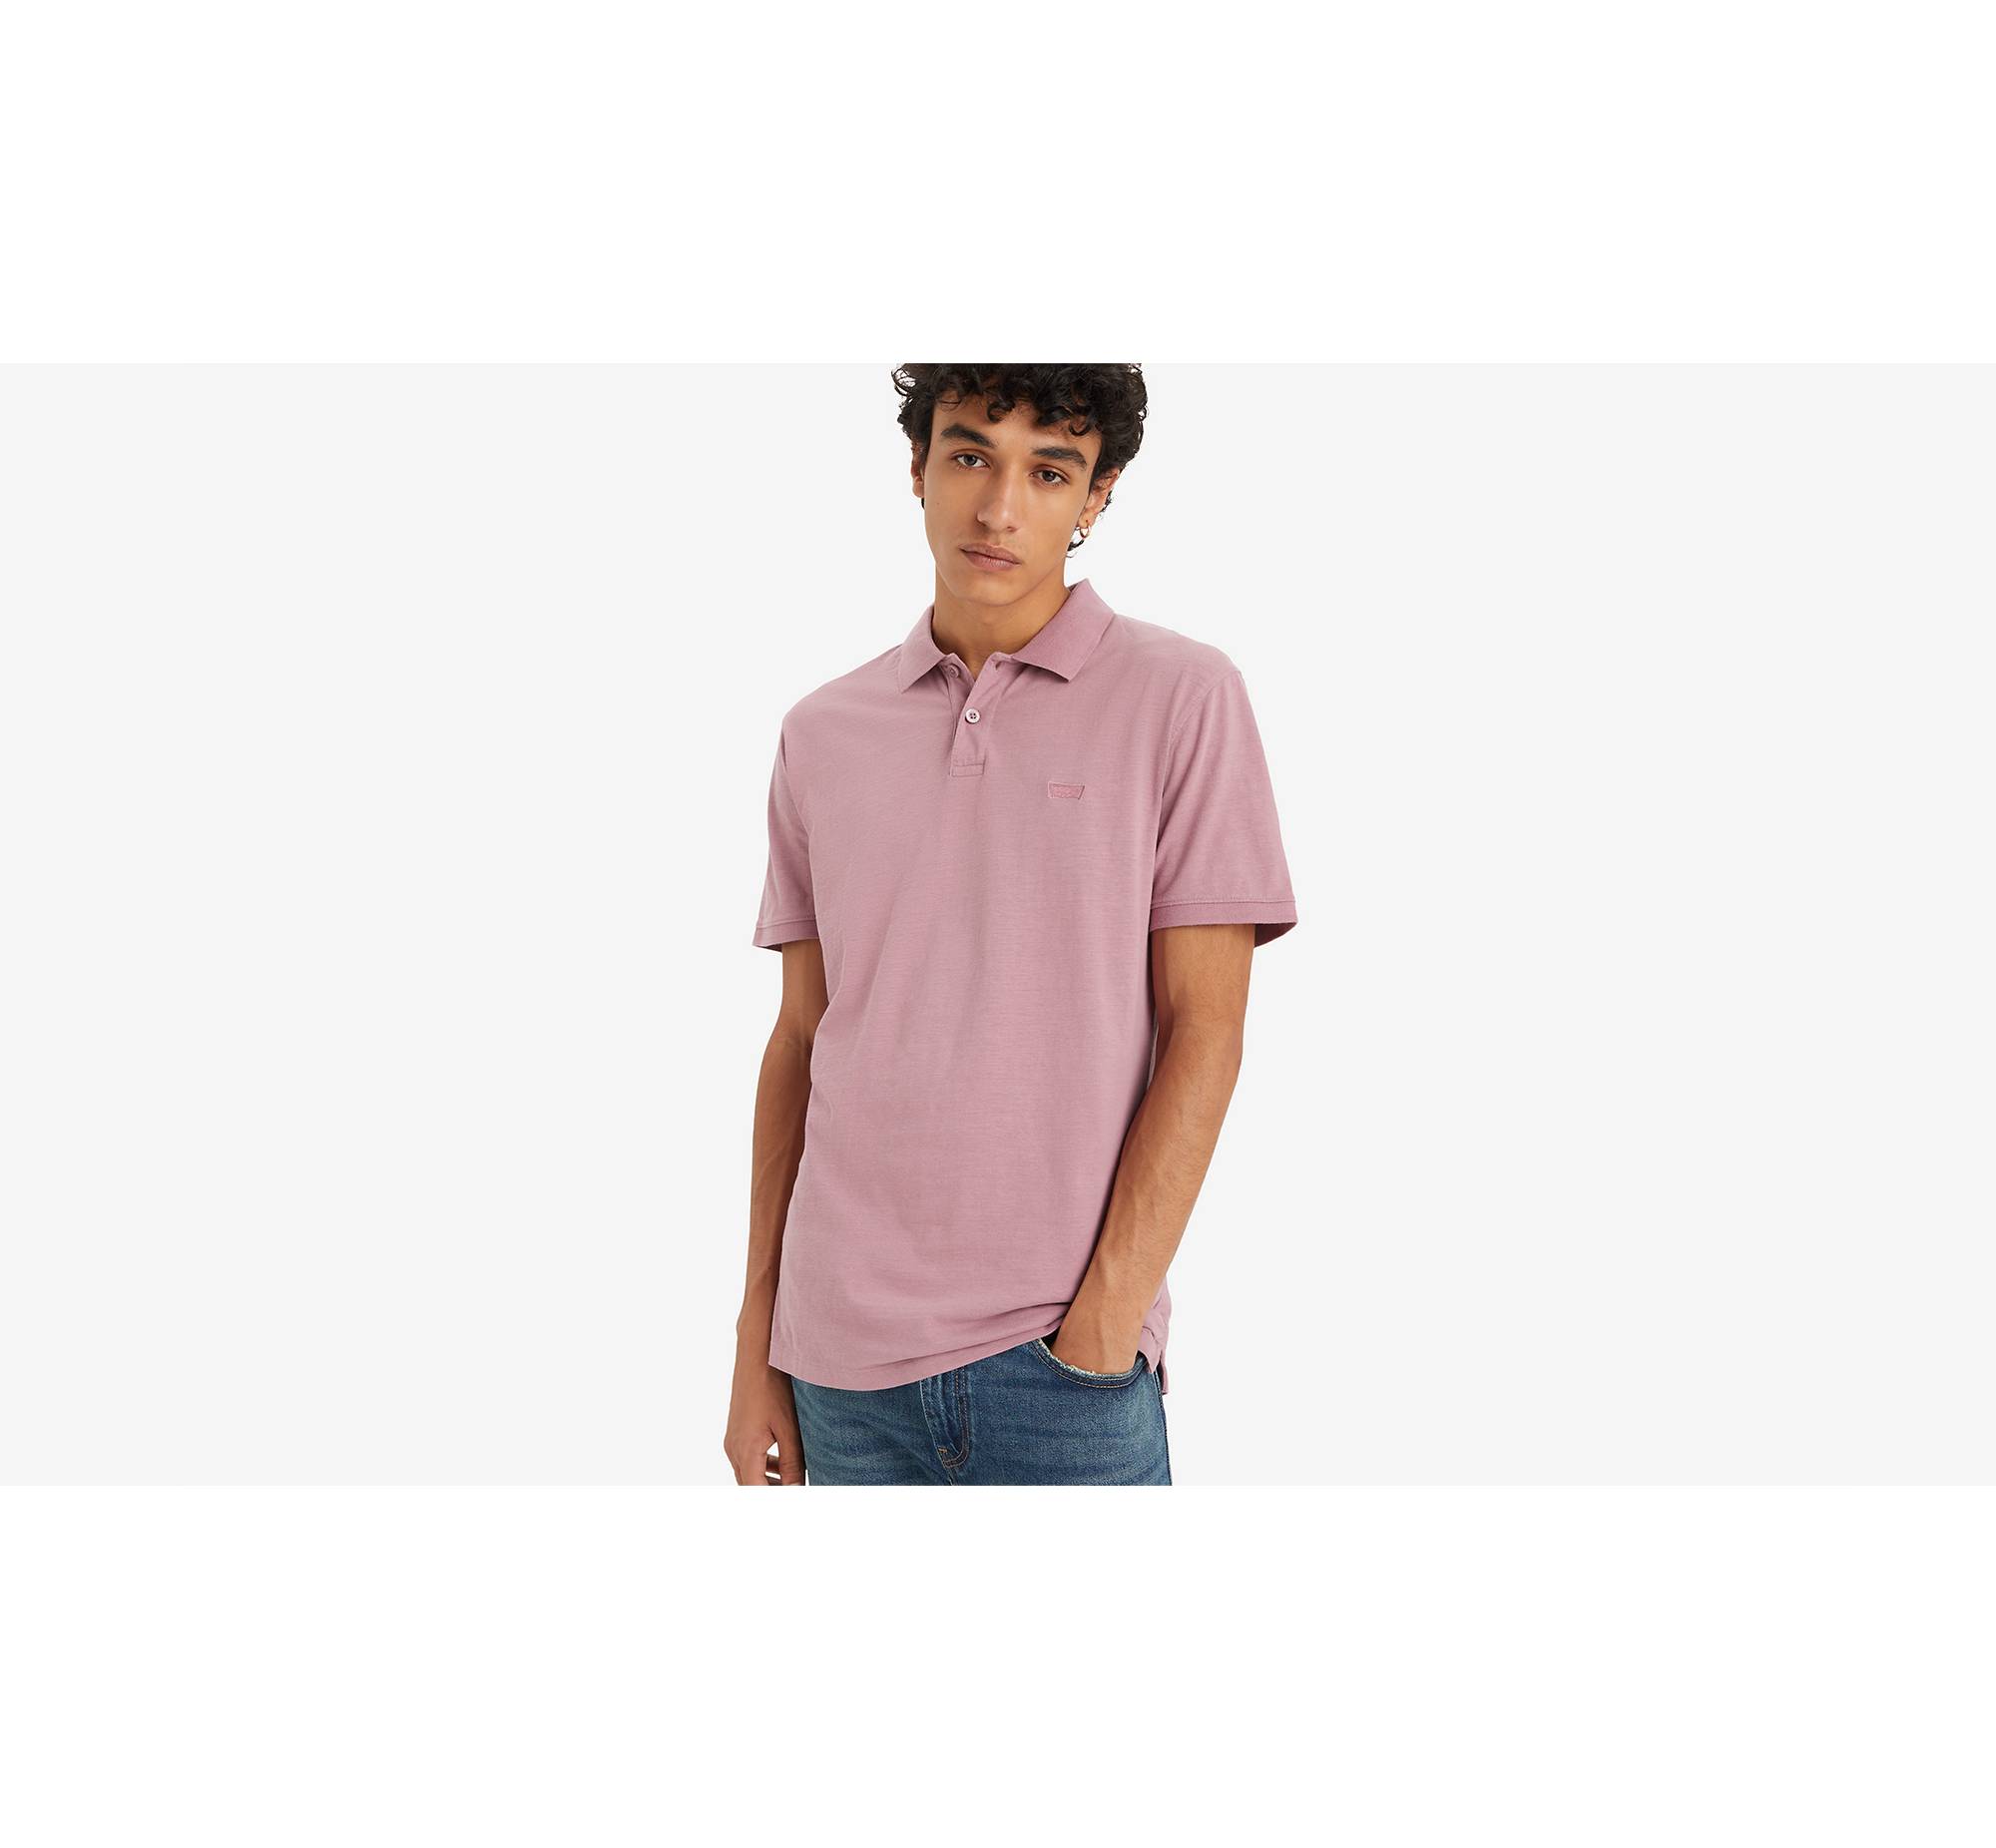 Polo shirt Slim Fit - Light pink marl - Men